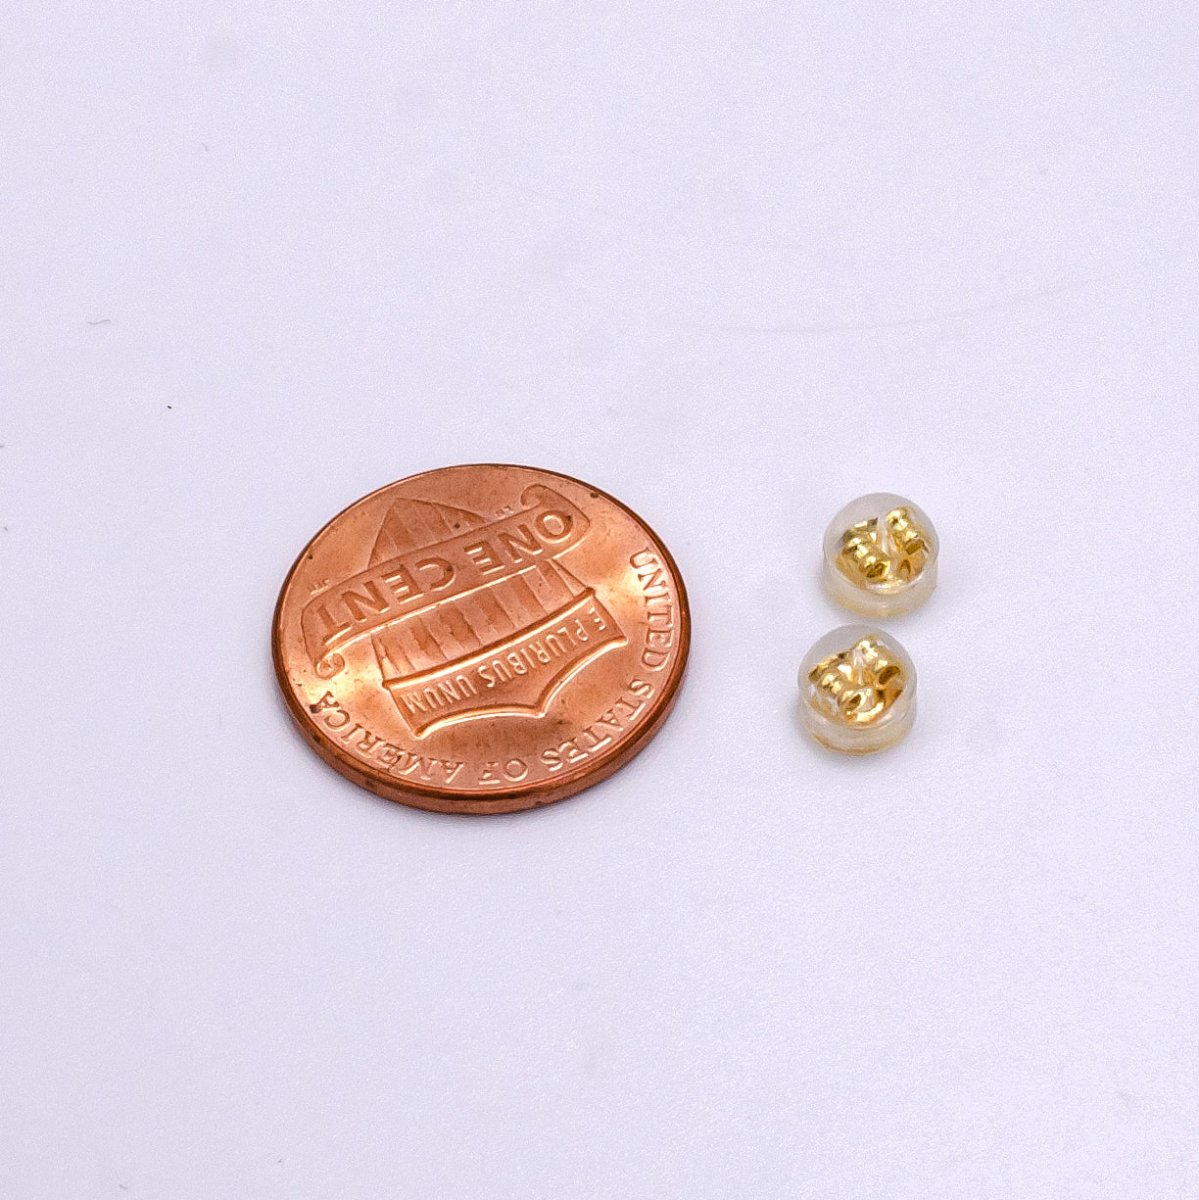 14K Gold Filled 5mm Rubber Backings Earrings Finding Supply Pack in Gold & Silver | Z621 Z622 - DLUXCA